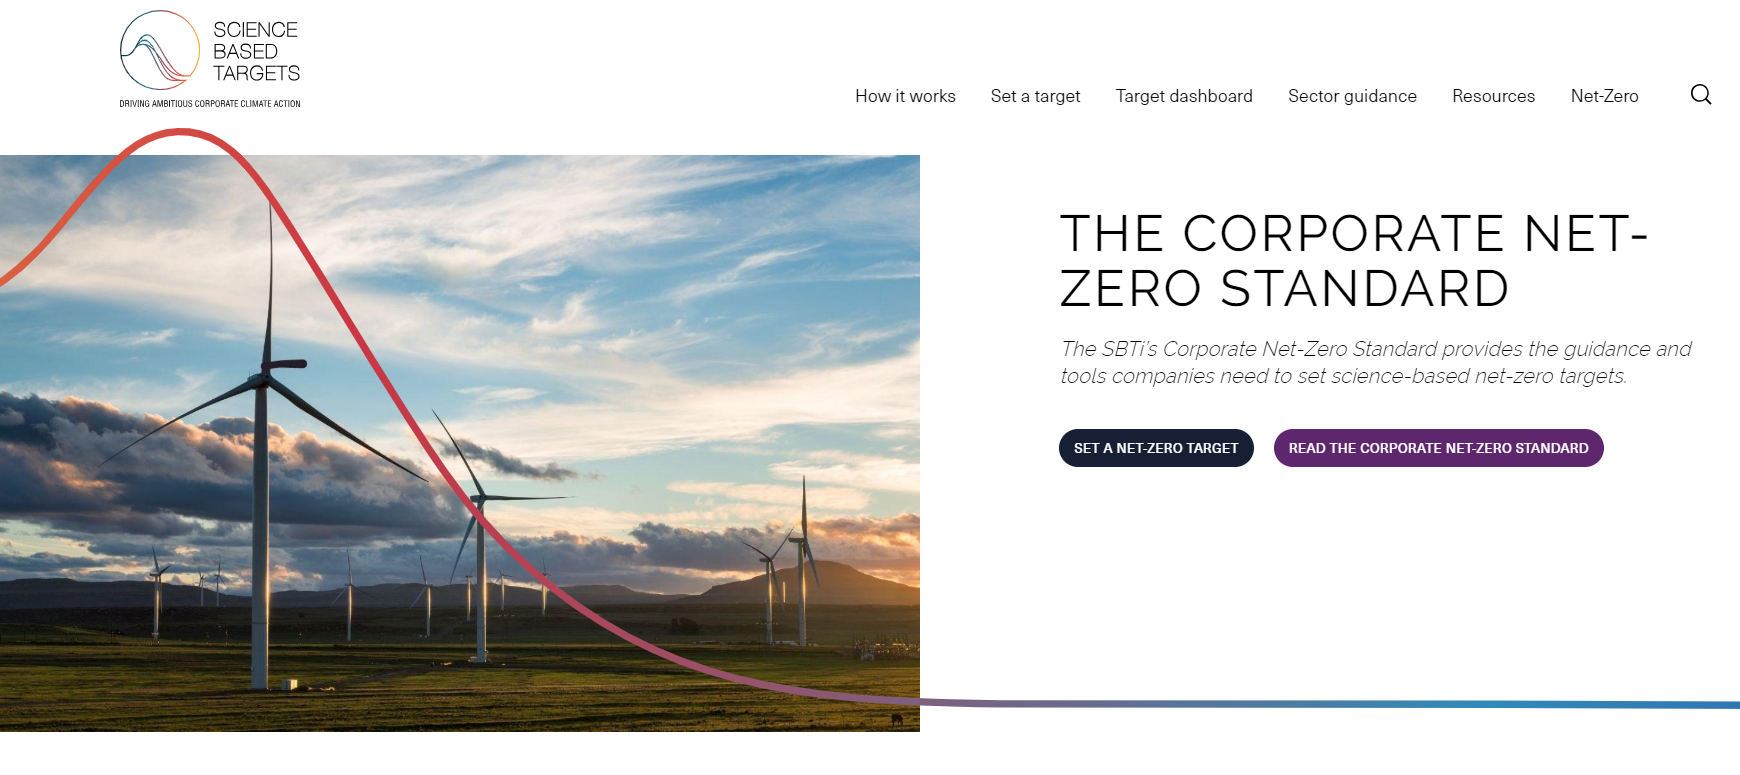 The corporate Net Zero standard